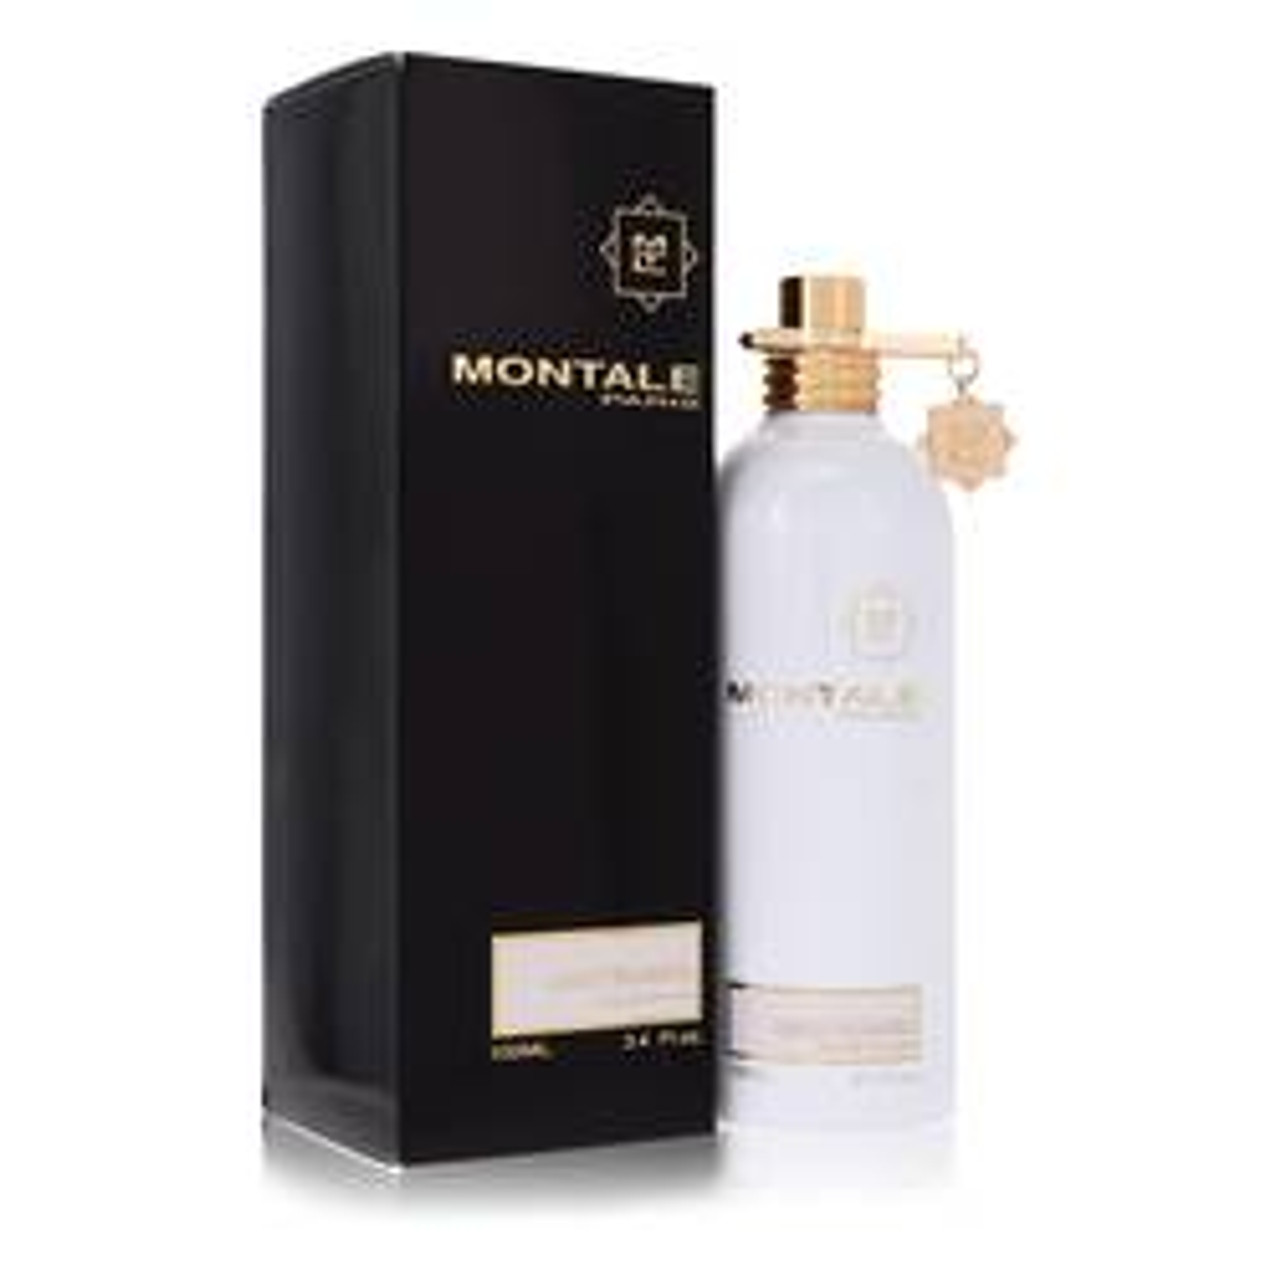 Montale Sunset Flowers Perfume By Montale Eau De Parfum Spray 3.3 oz for Women - *Pre-Order